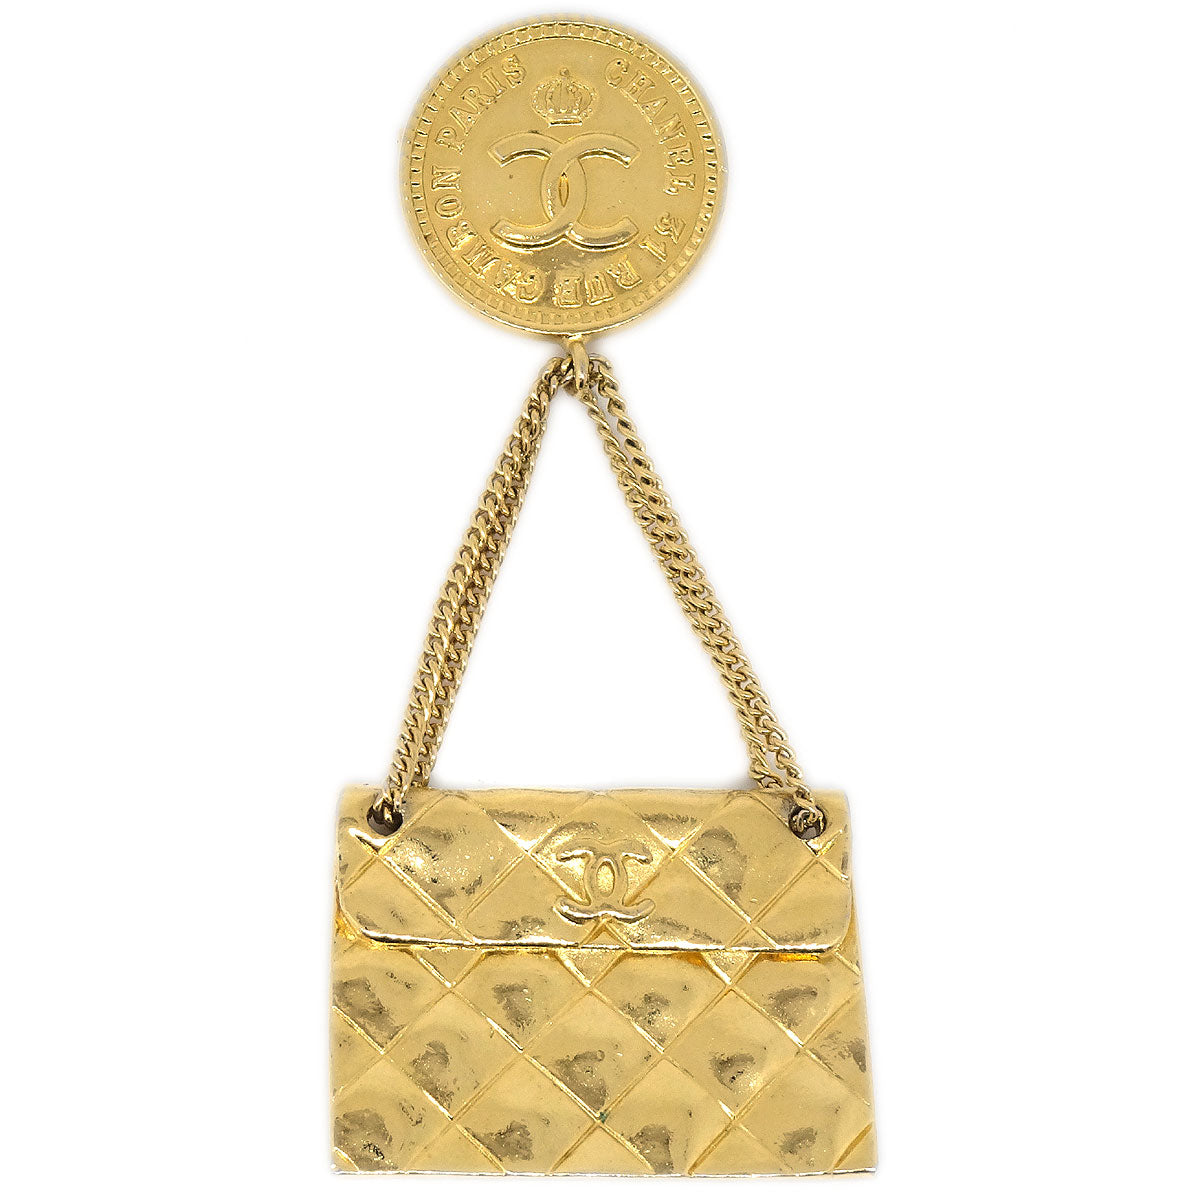 Pin on Chanel Handbags